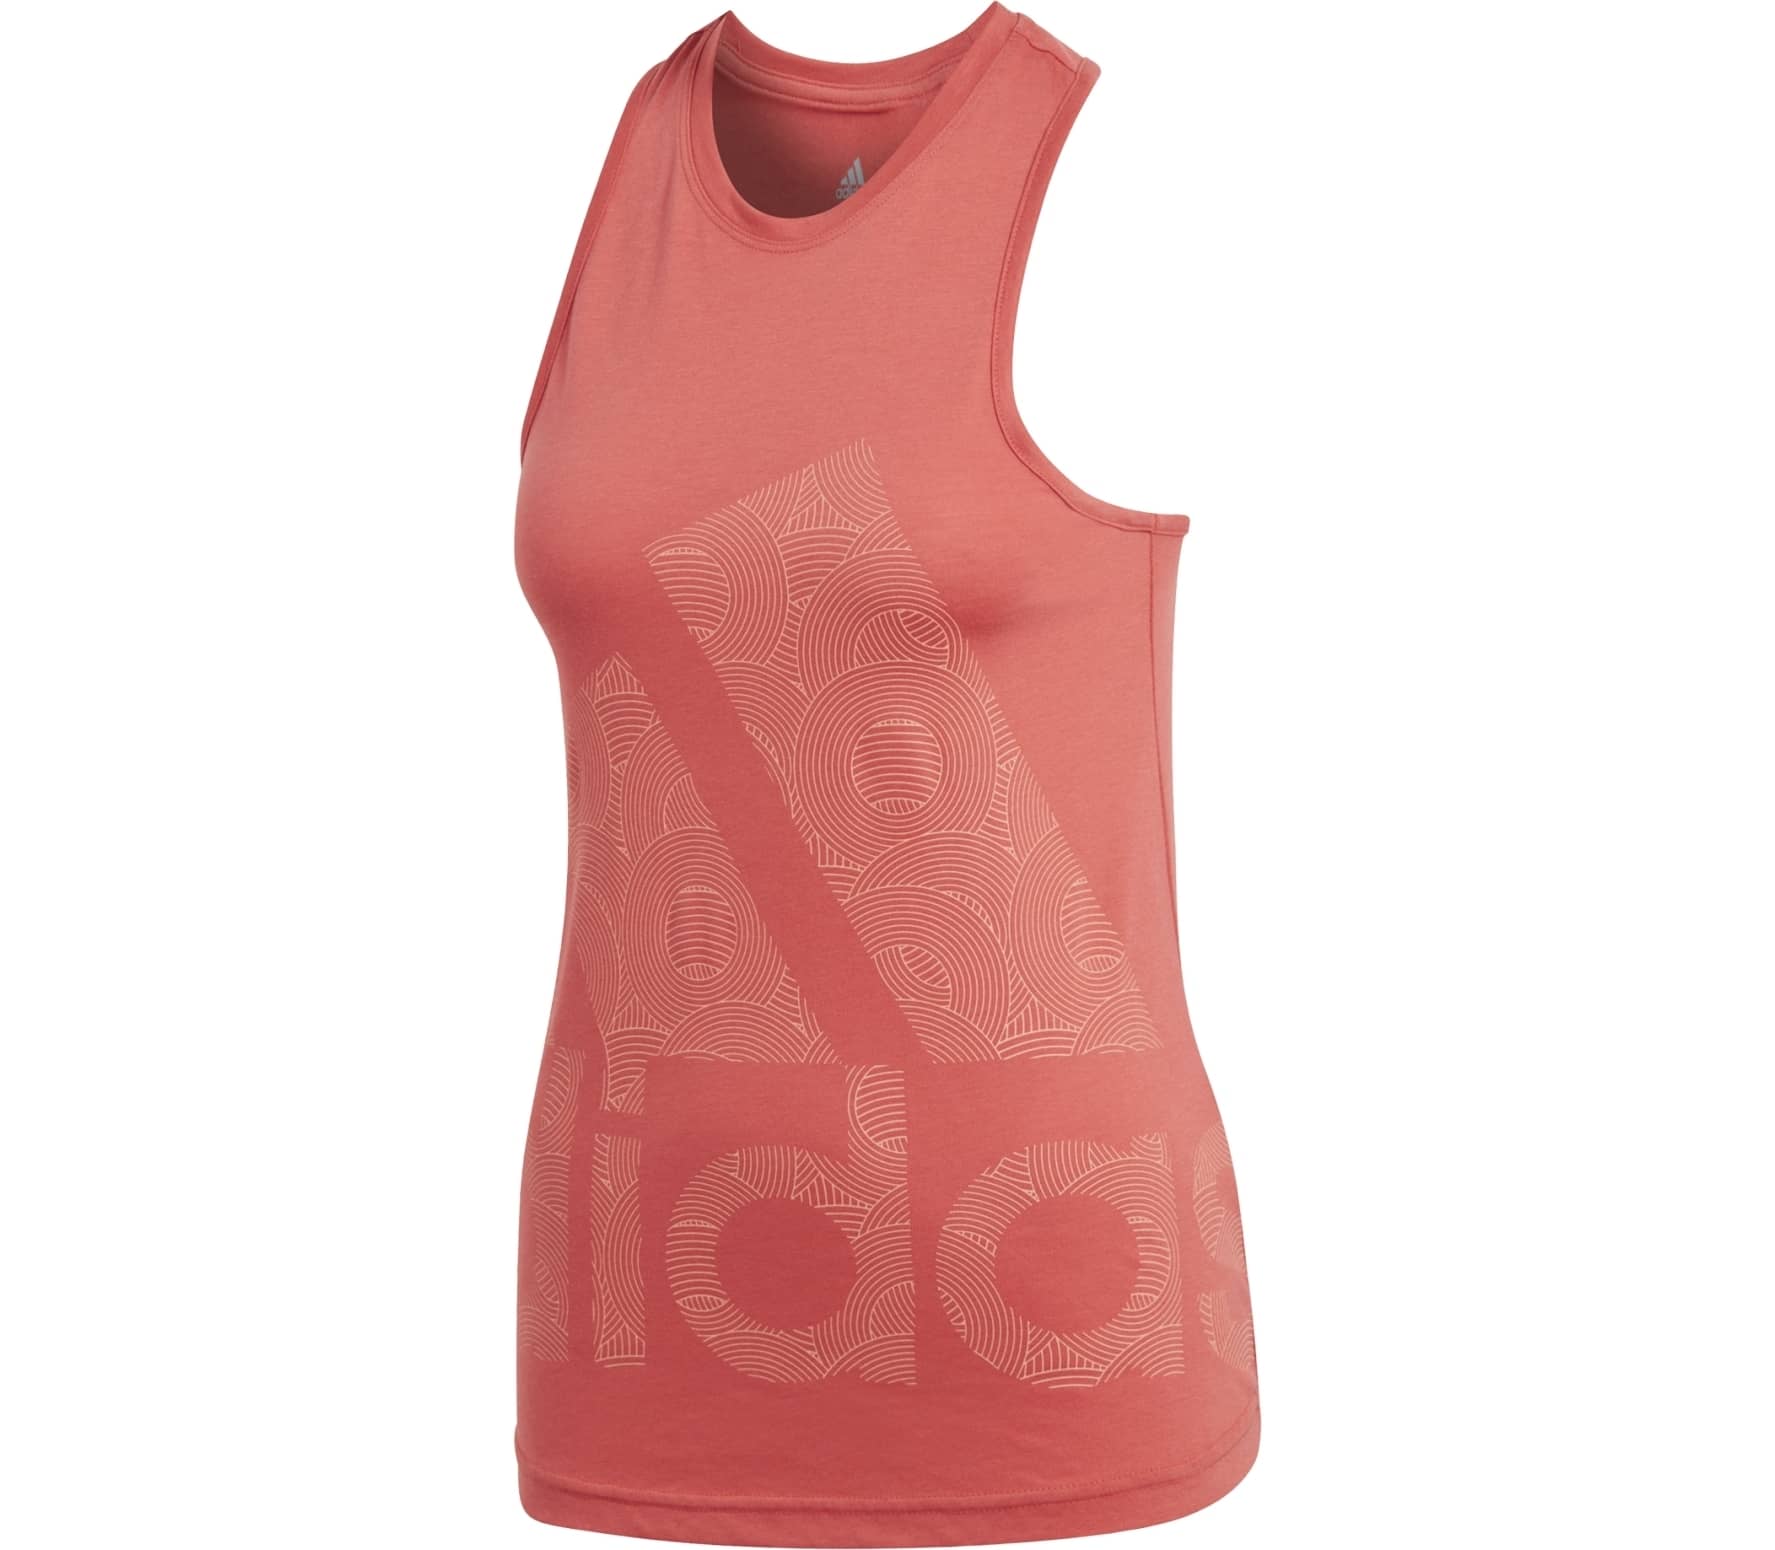 Top Red Logo - Adidas - Logo Cool women's training tank top top (red) - buy it at ...